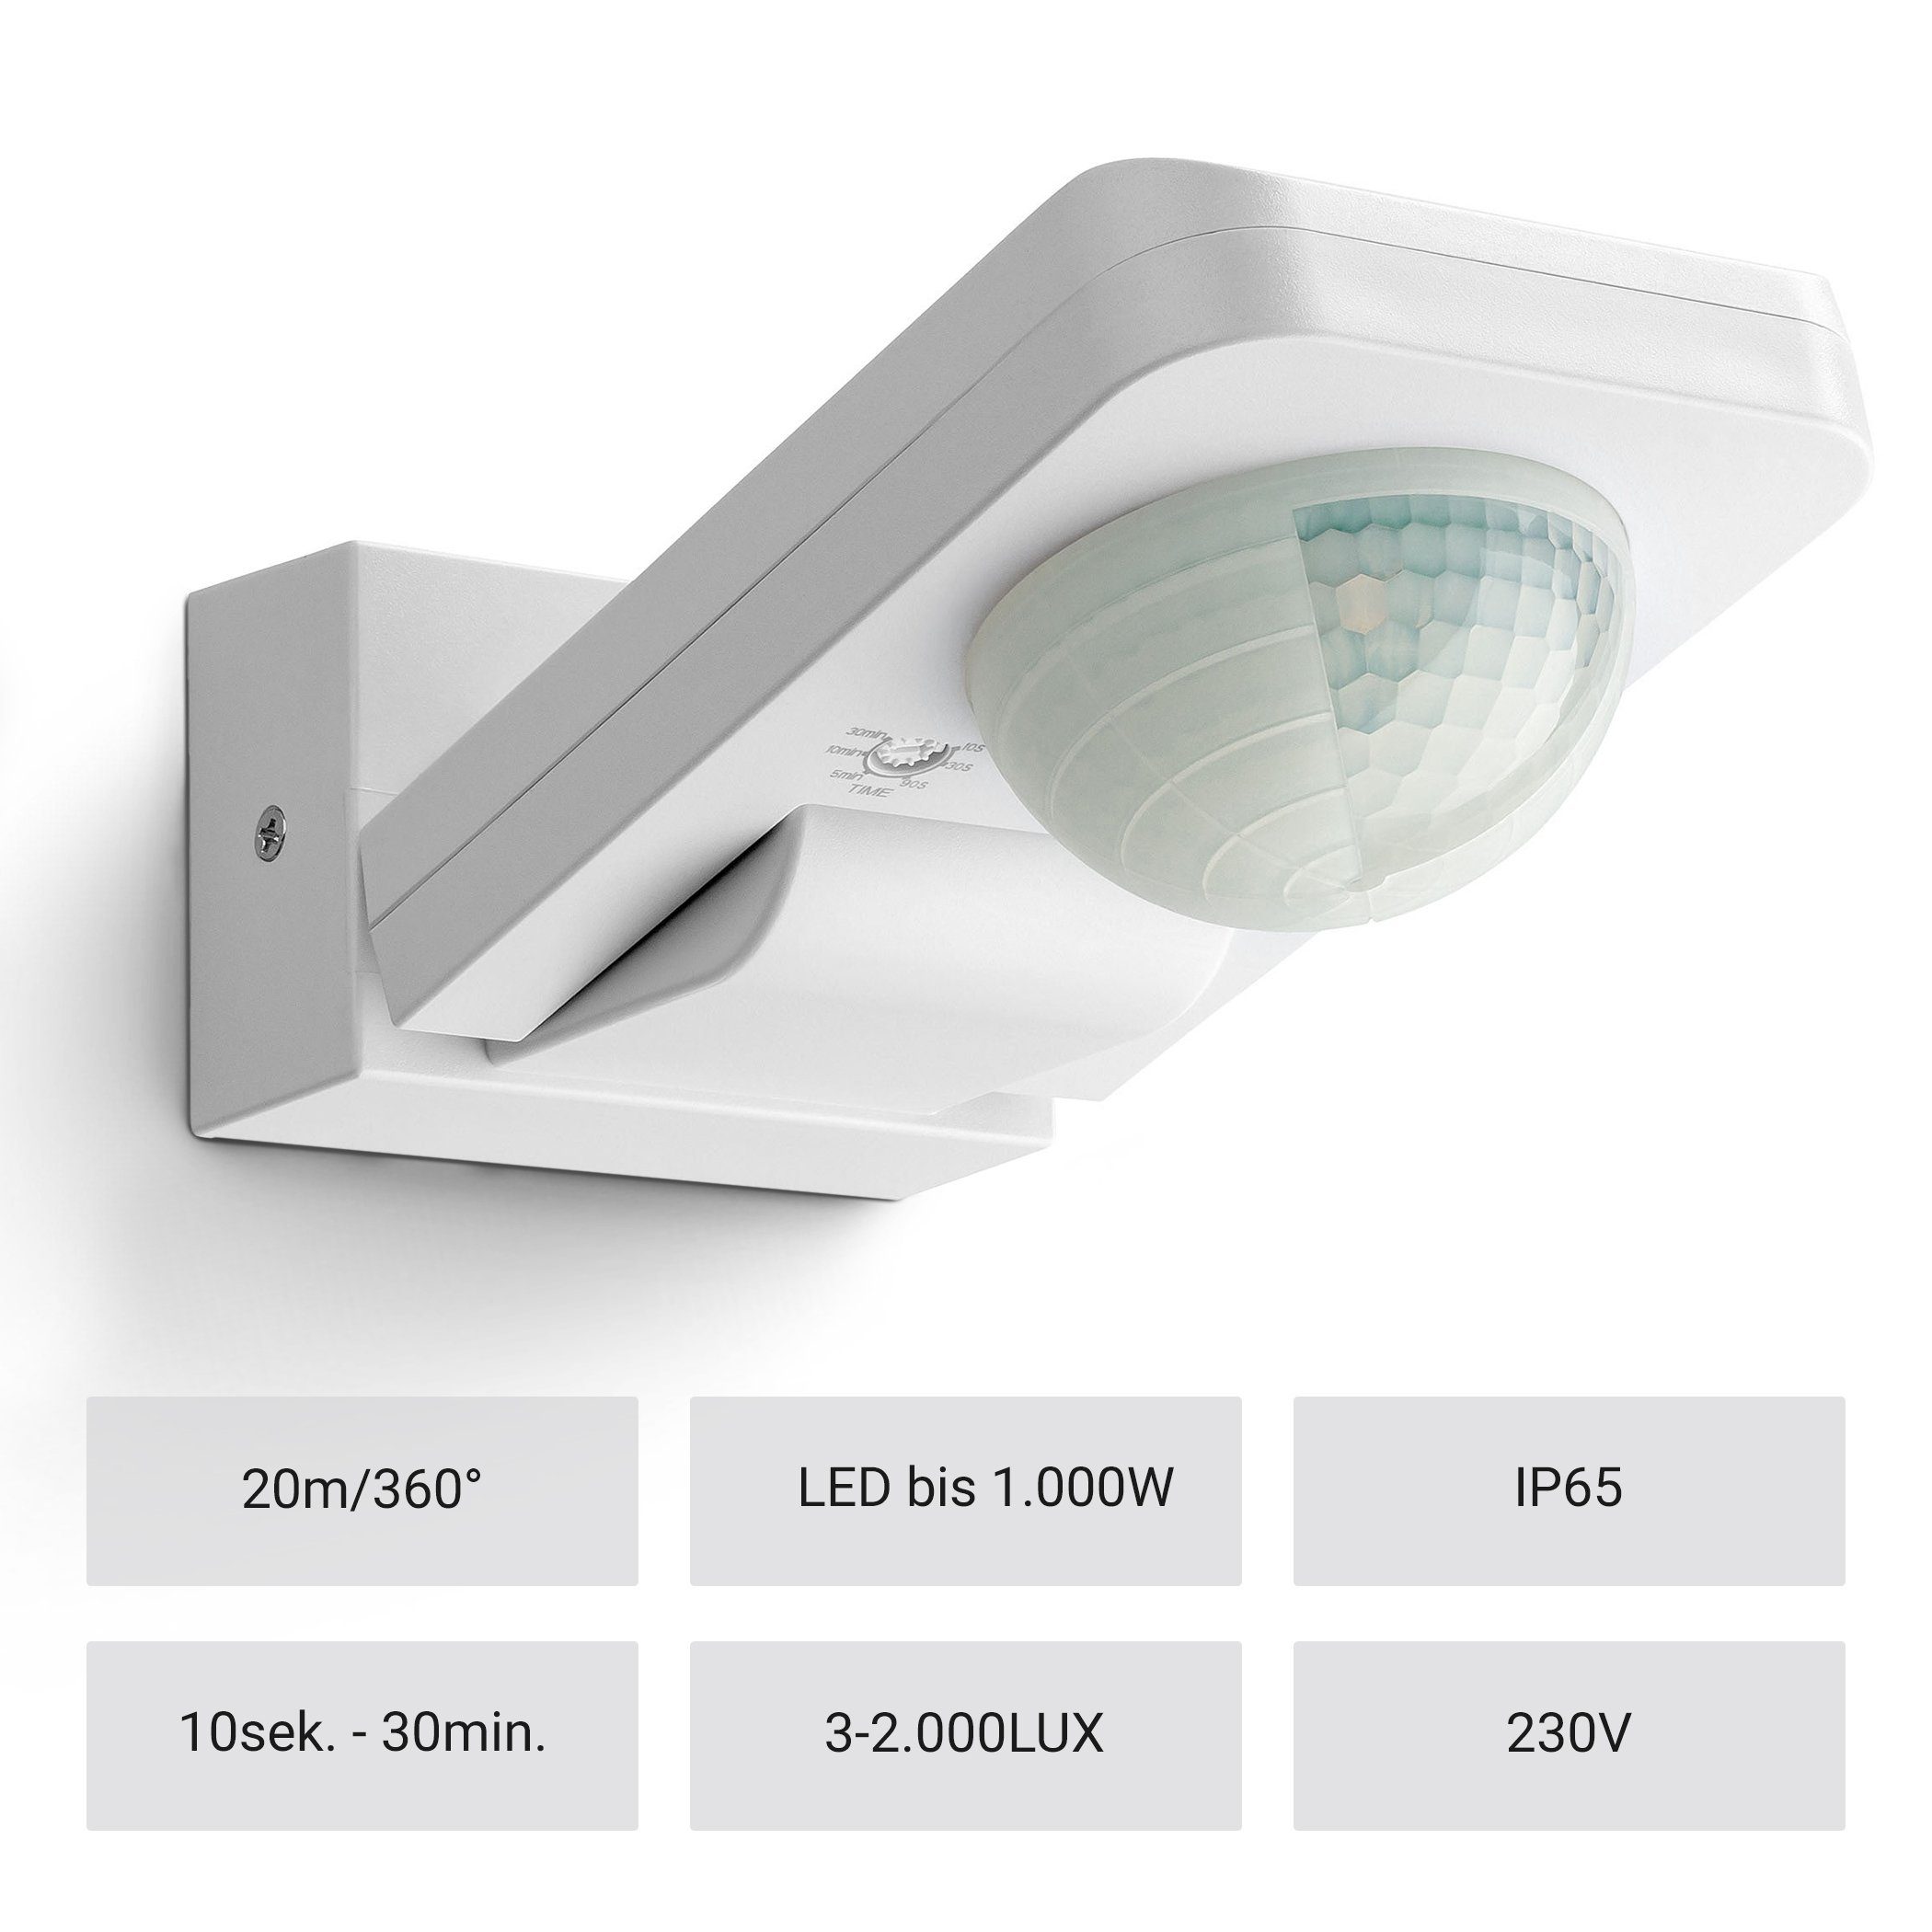 SEBSON Bewegungsmelder Bewegungsmelder geeignet Aussen LED Aufputz, 360°, 20m / IP65,